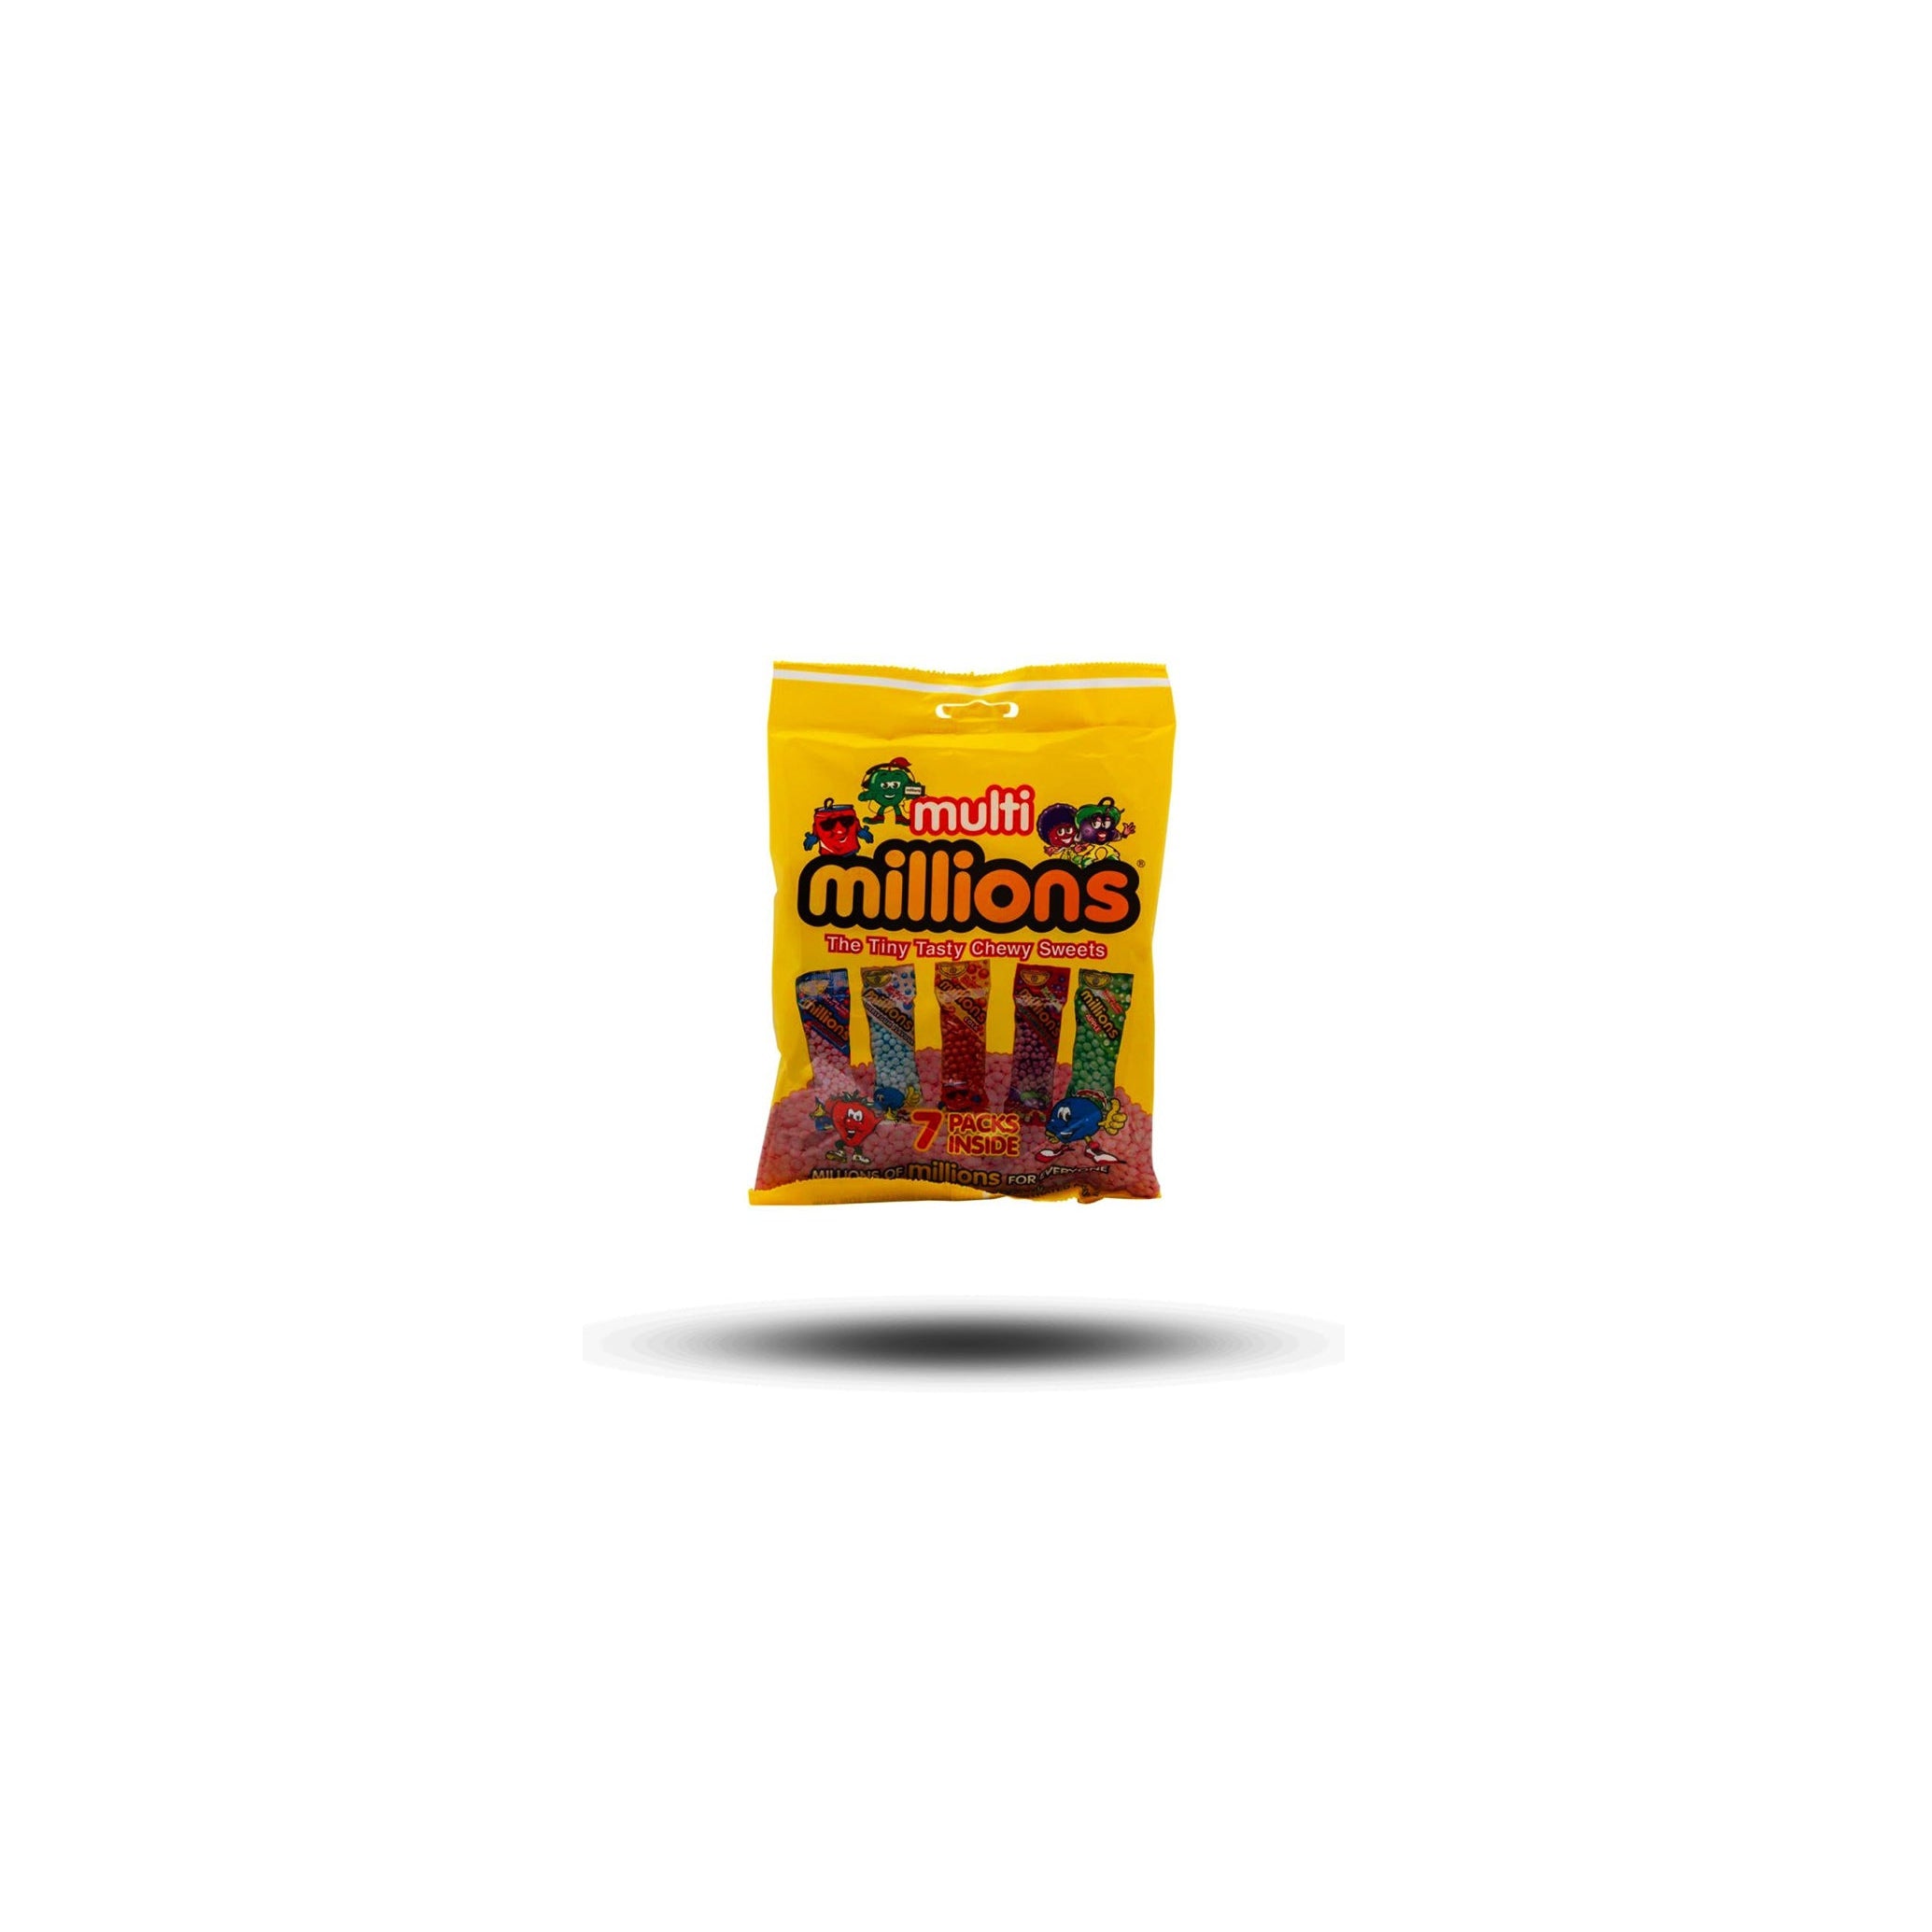 Millions Multi The Tiny Tasty Chewy Sweets 115g-Golden Casket (Greenock) Ltd.-SNACK SHOP AUSTRIA